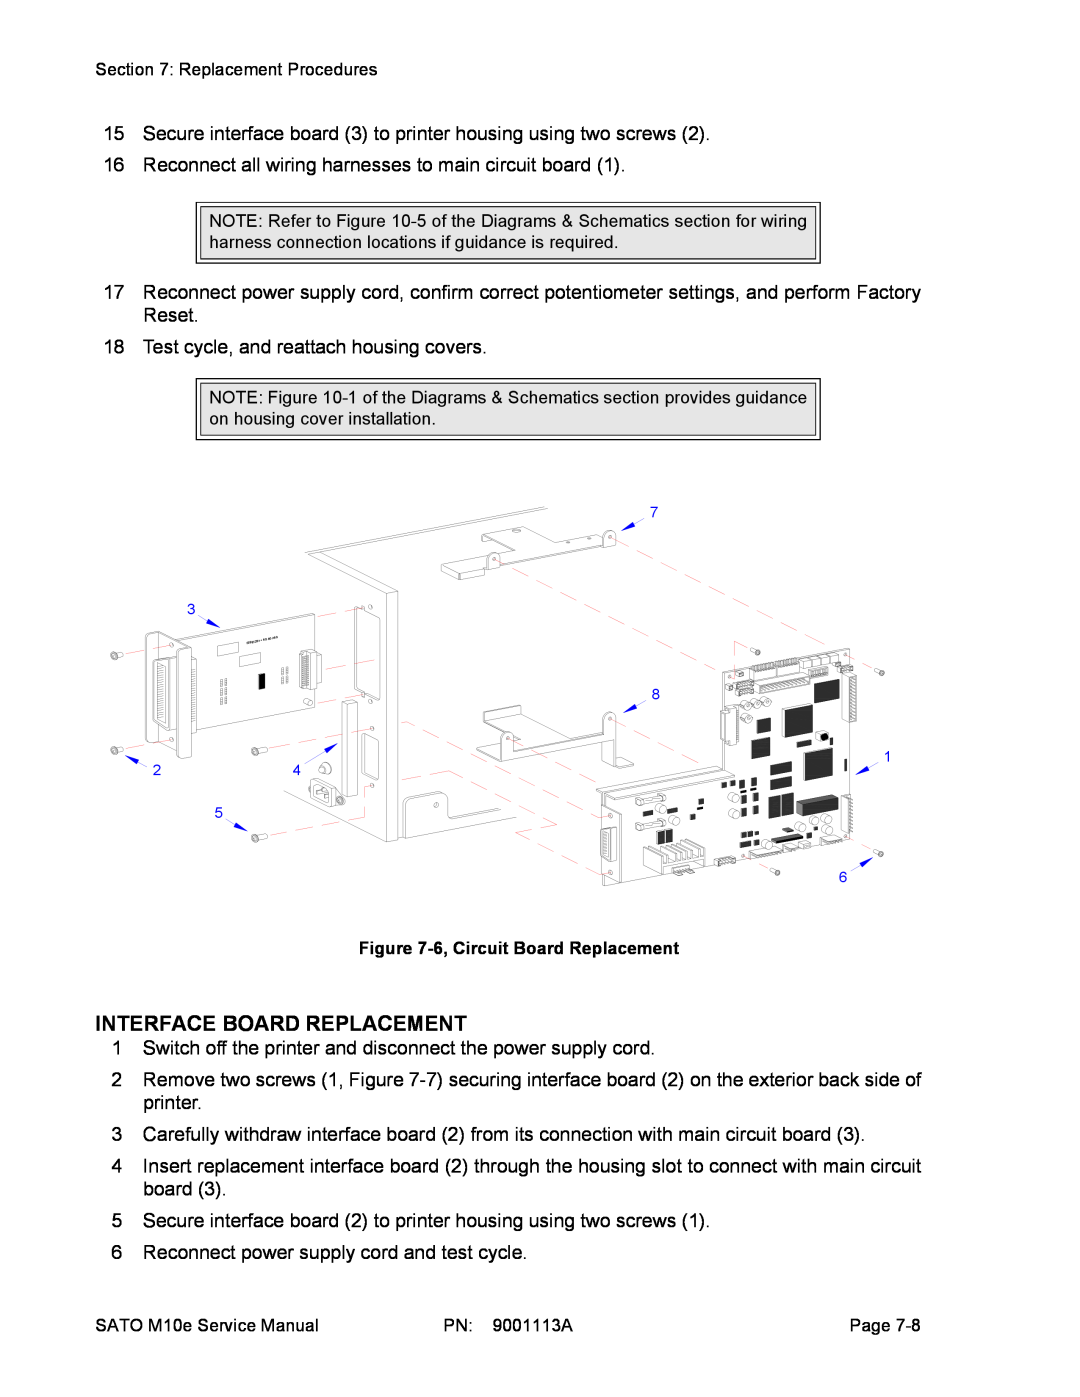 SATO 10e service manual Interface Board Replacement, 6, Circuit Board Replacement 